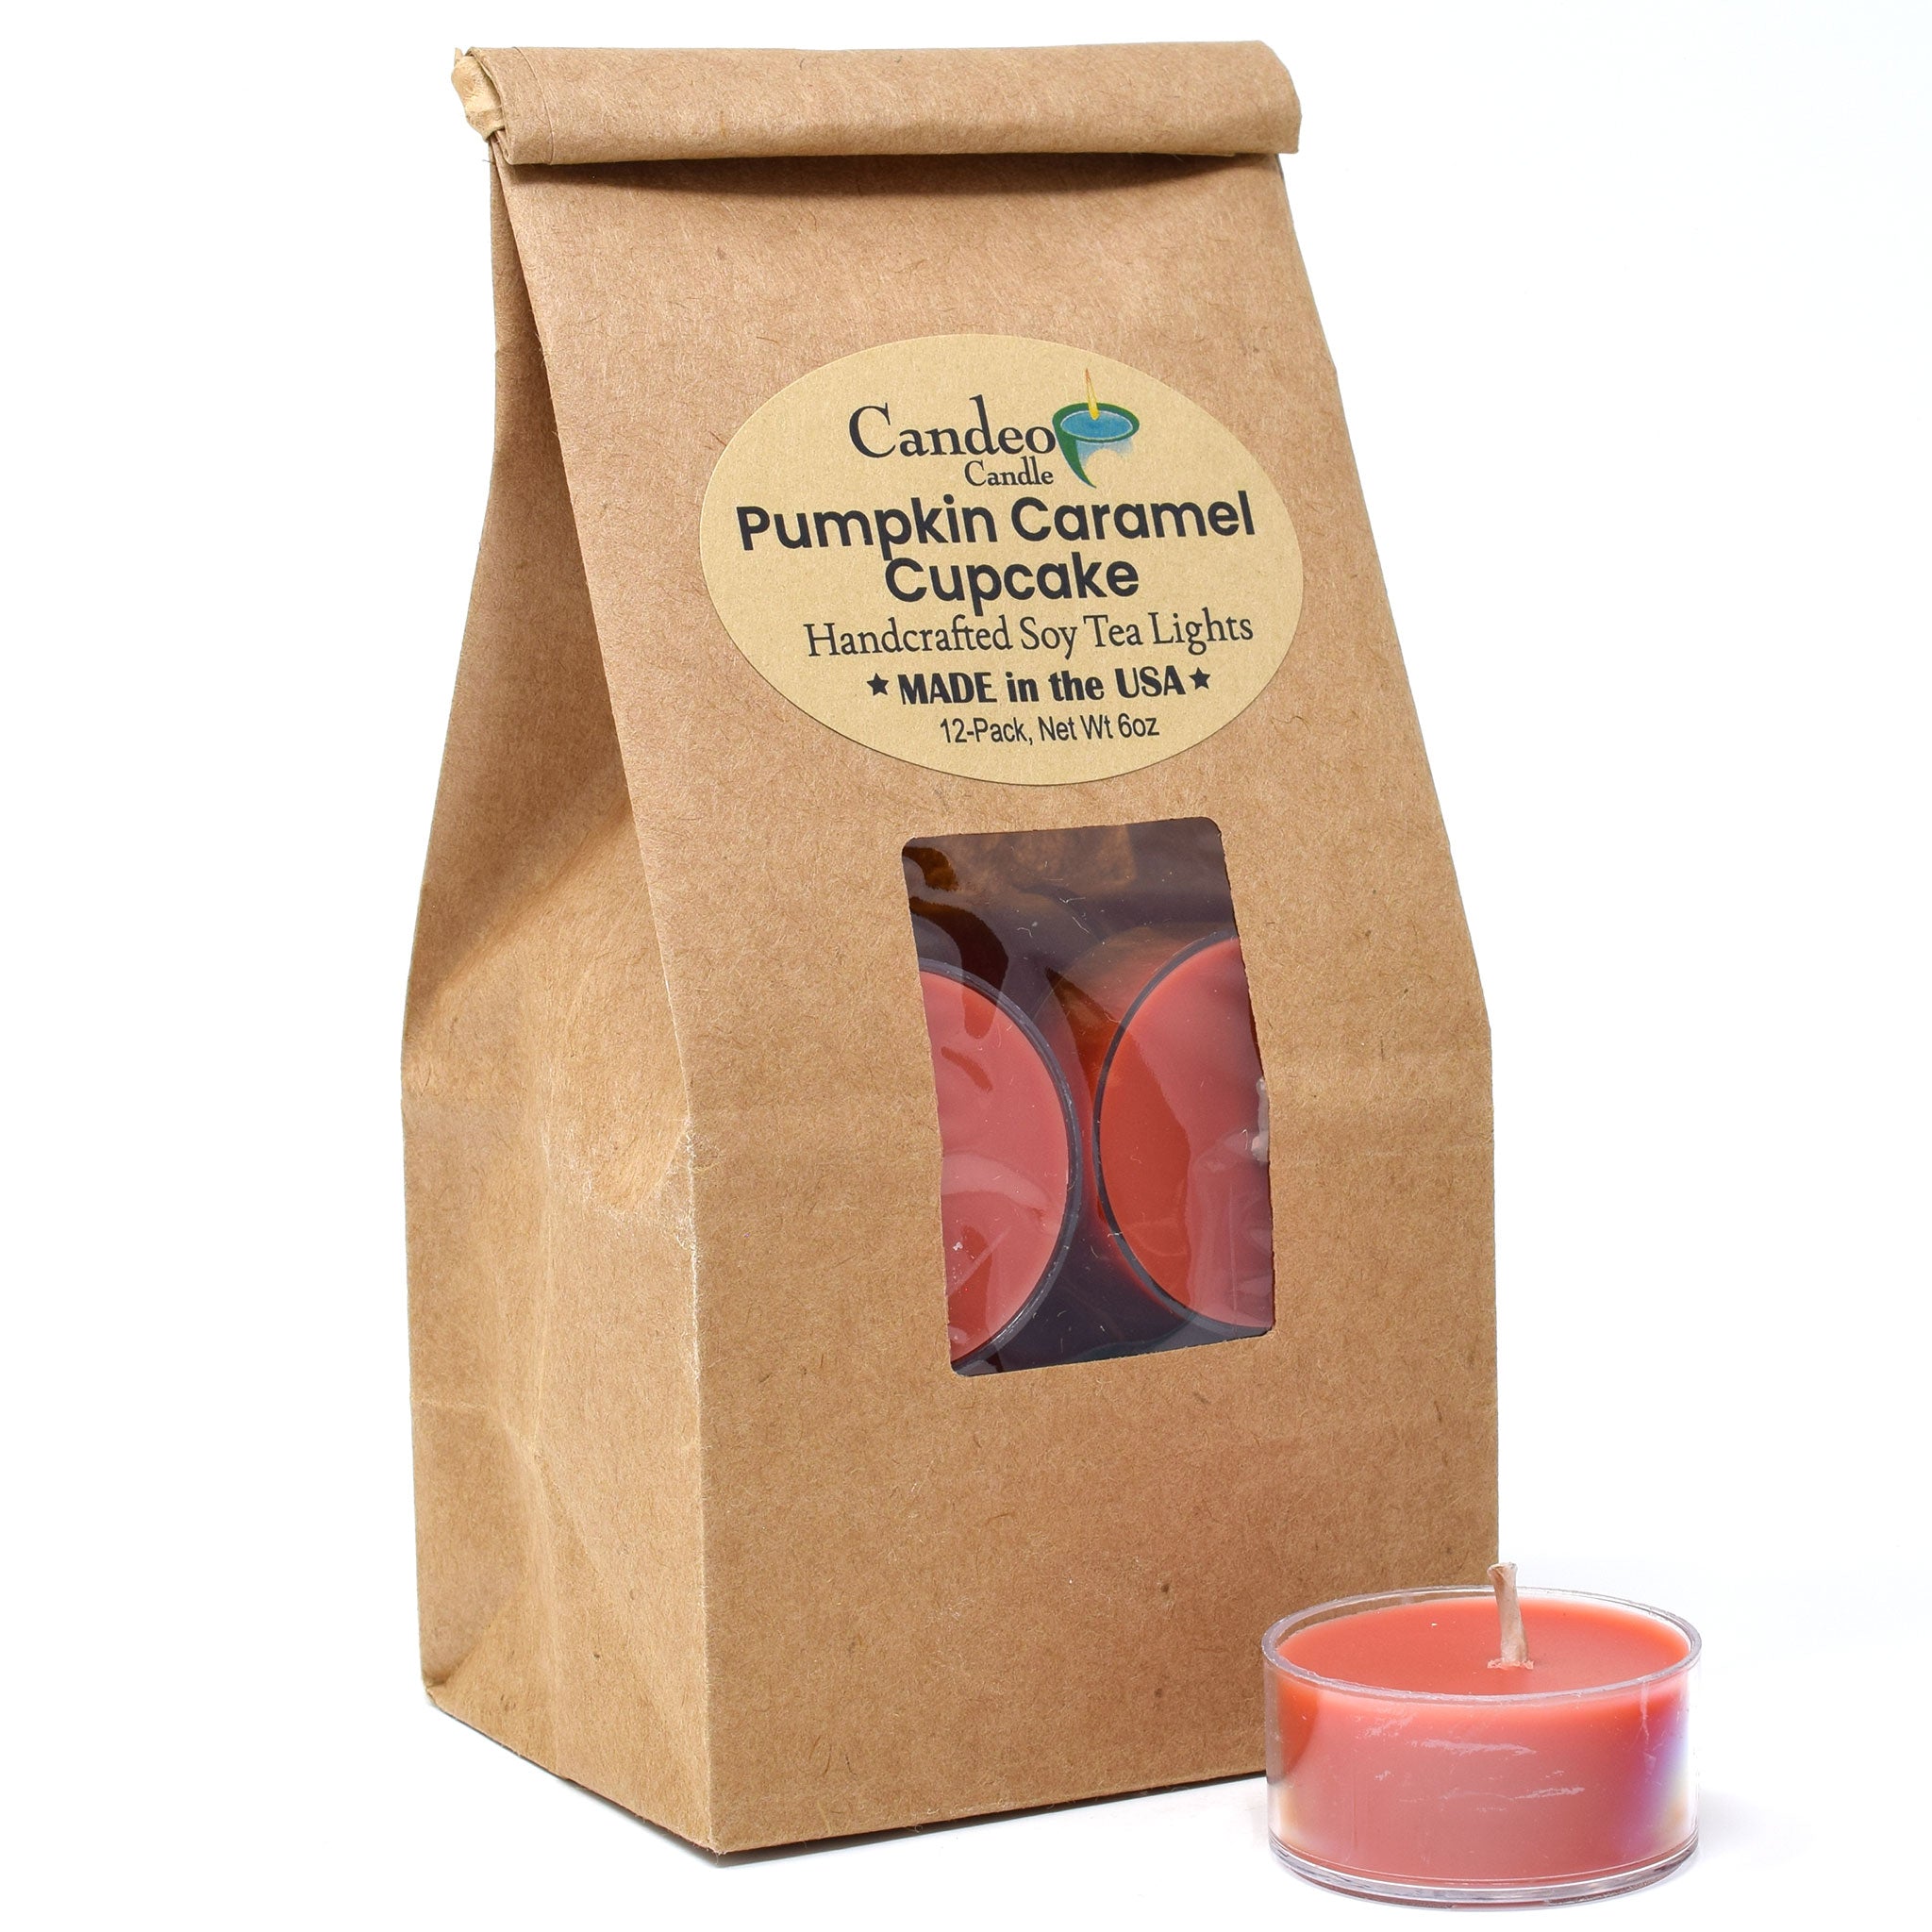 Pumpkin Caramel Cupcake, Soy Tea Light 12-Pack - Candeo Candle